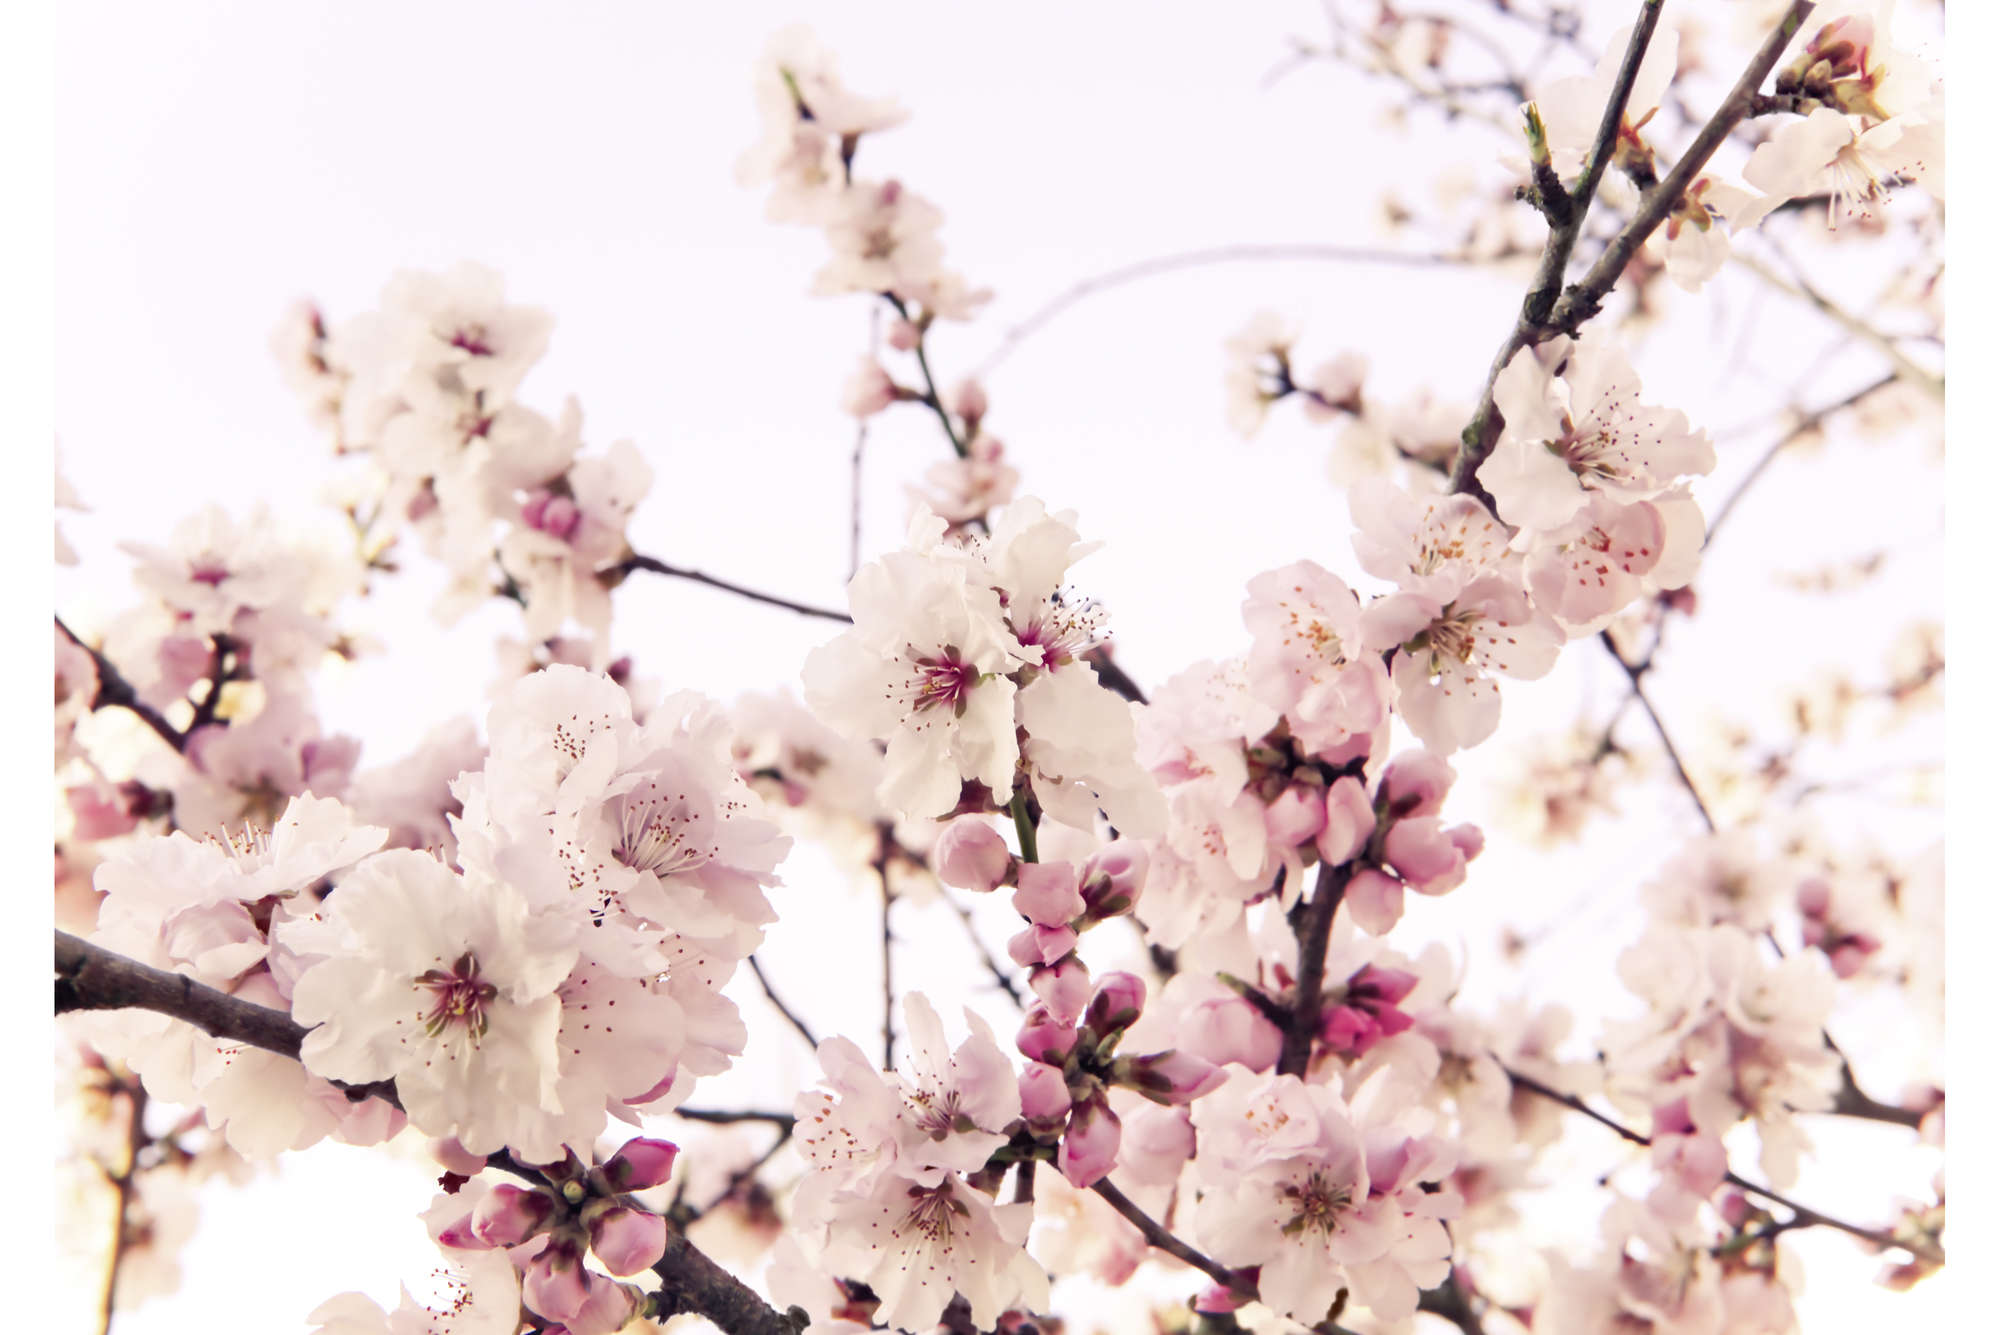             Natur Fototapete mit Kirschblüten – Premium Glattvlies
        